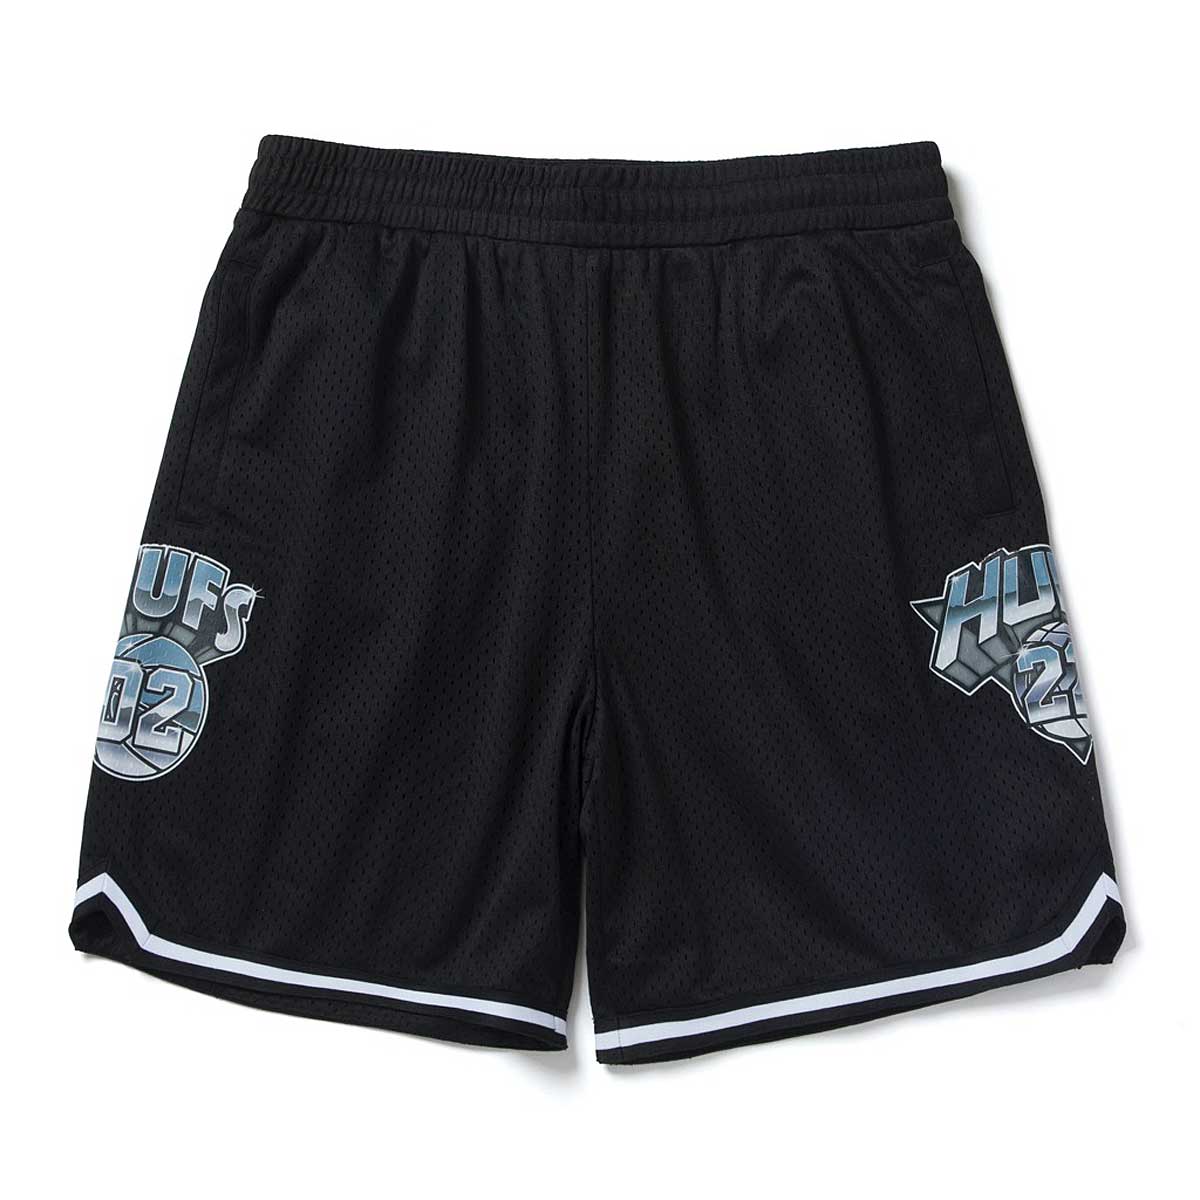 Huf Basketball Shorts, Black